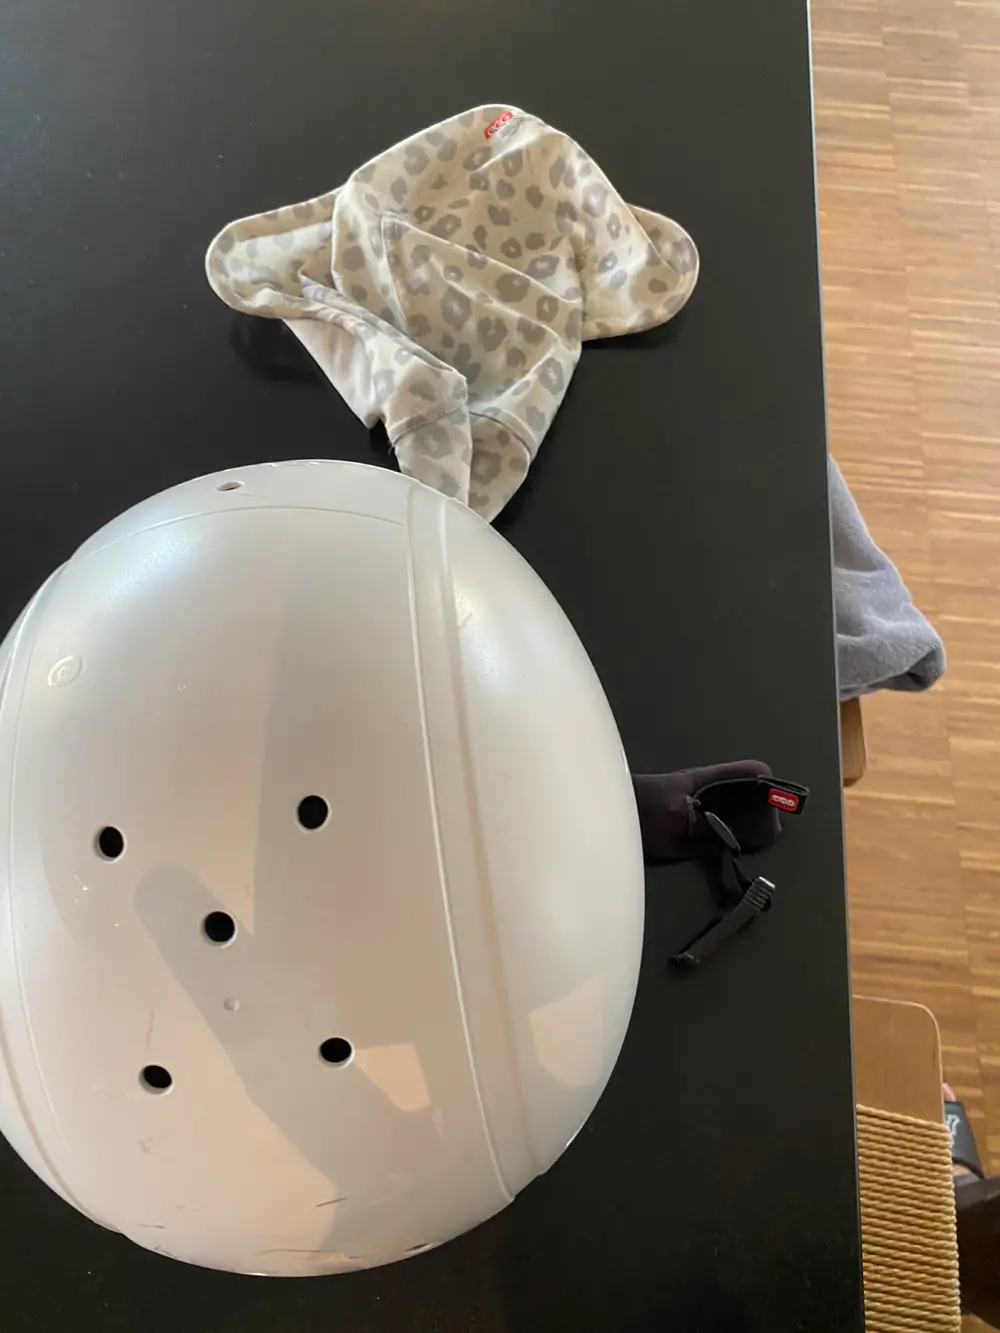 Egg helmet Cykel hjelm